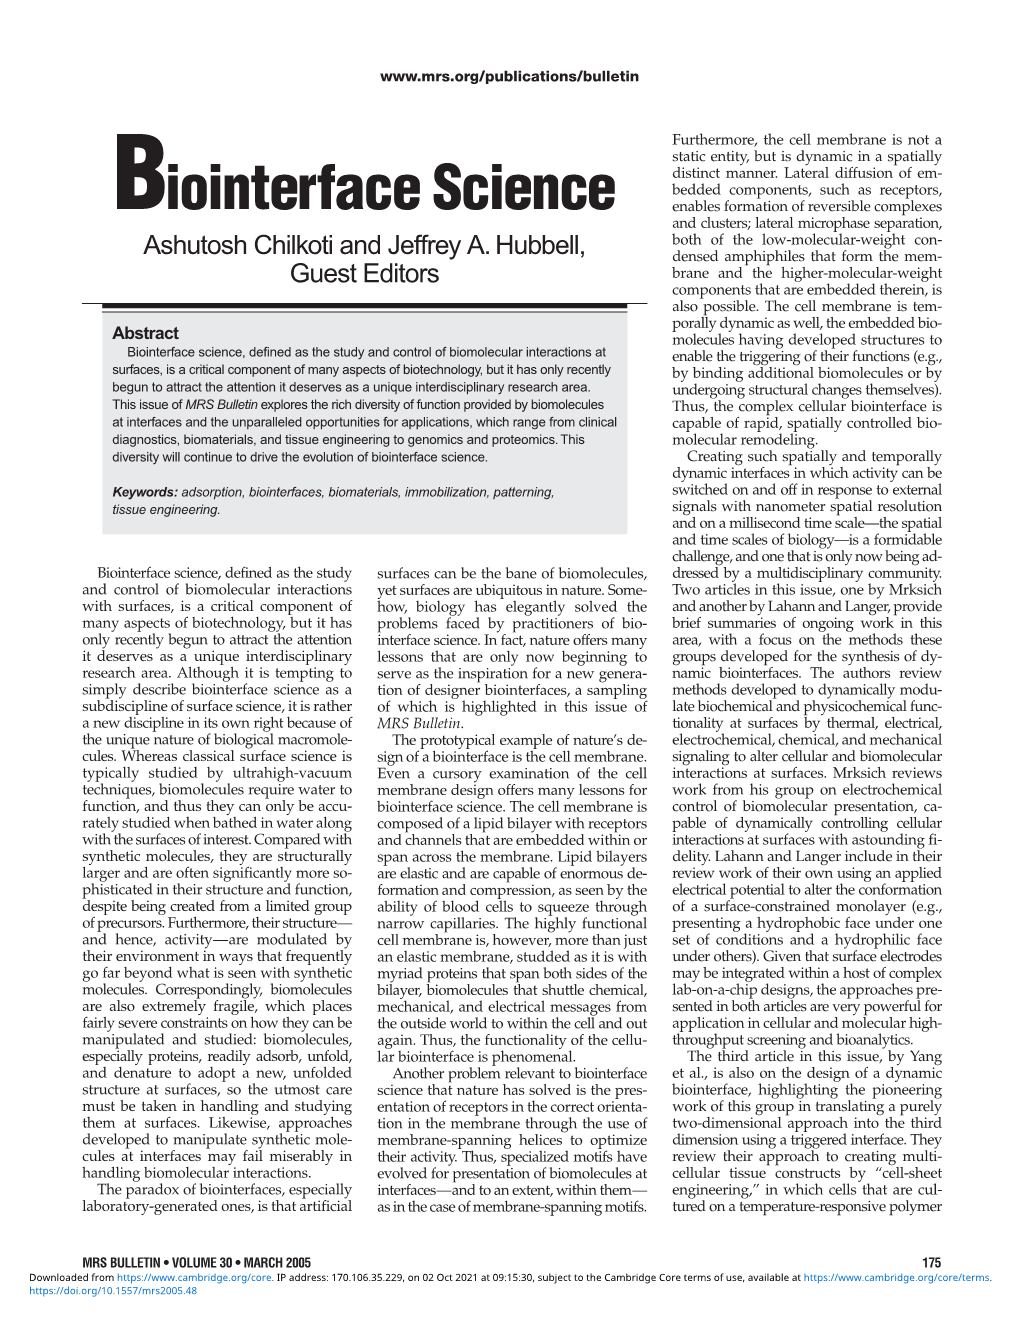 Biointerface Science